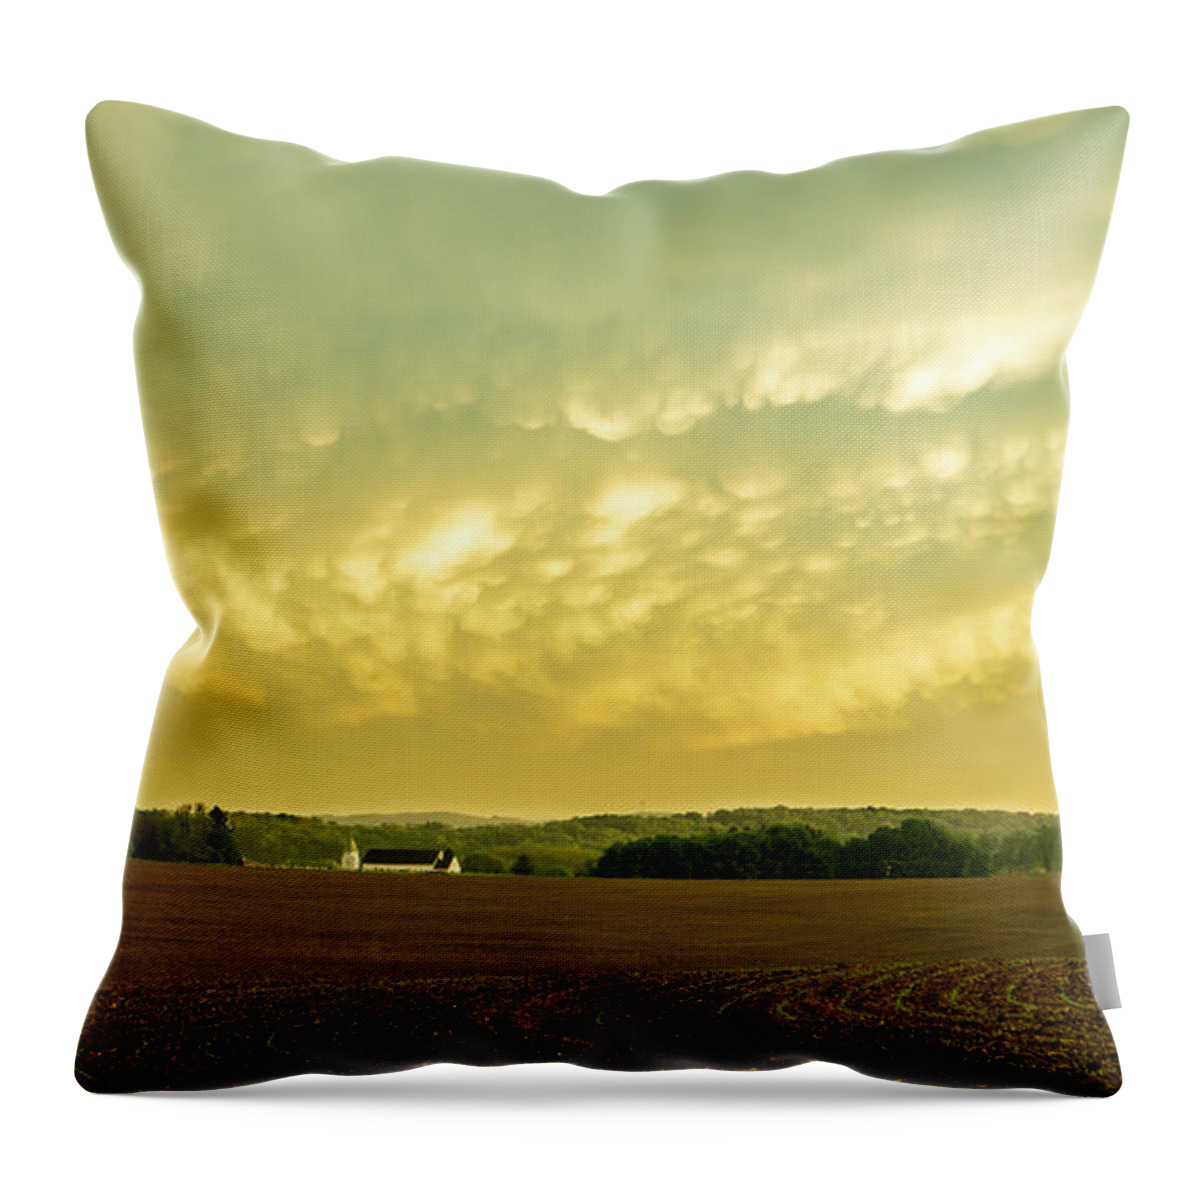 Sunset Throw Pillow featuring the photograph Thunder Storm over a Pennsylvania Farm by Jason Fink